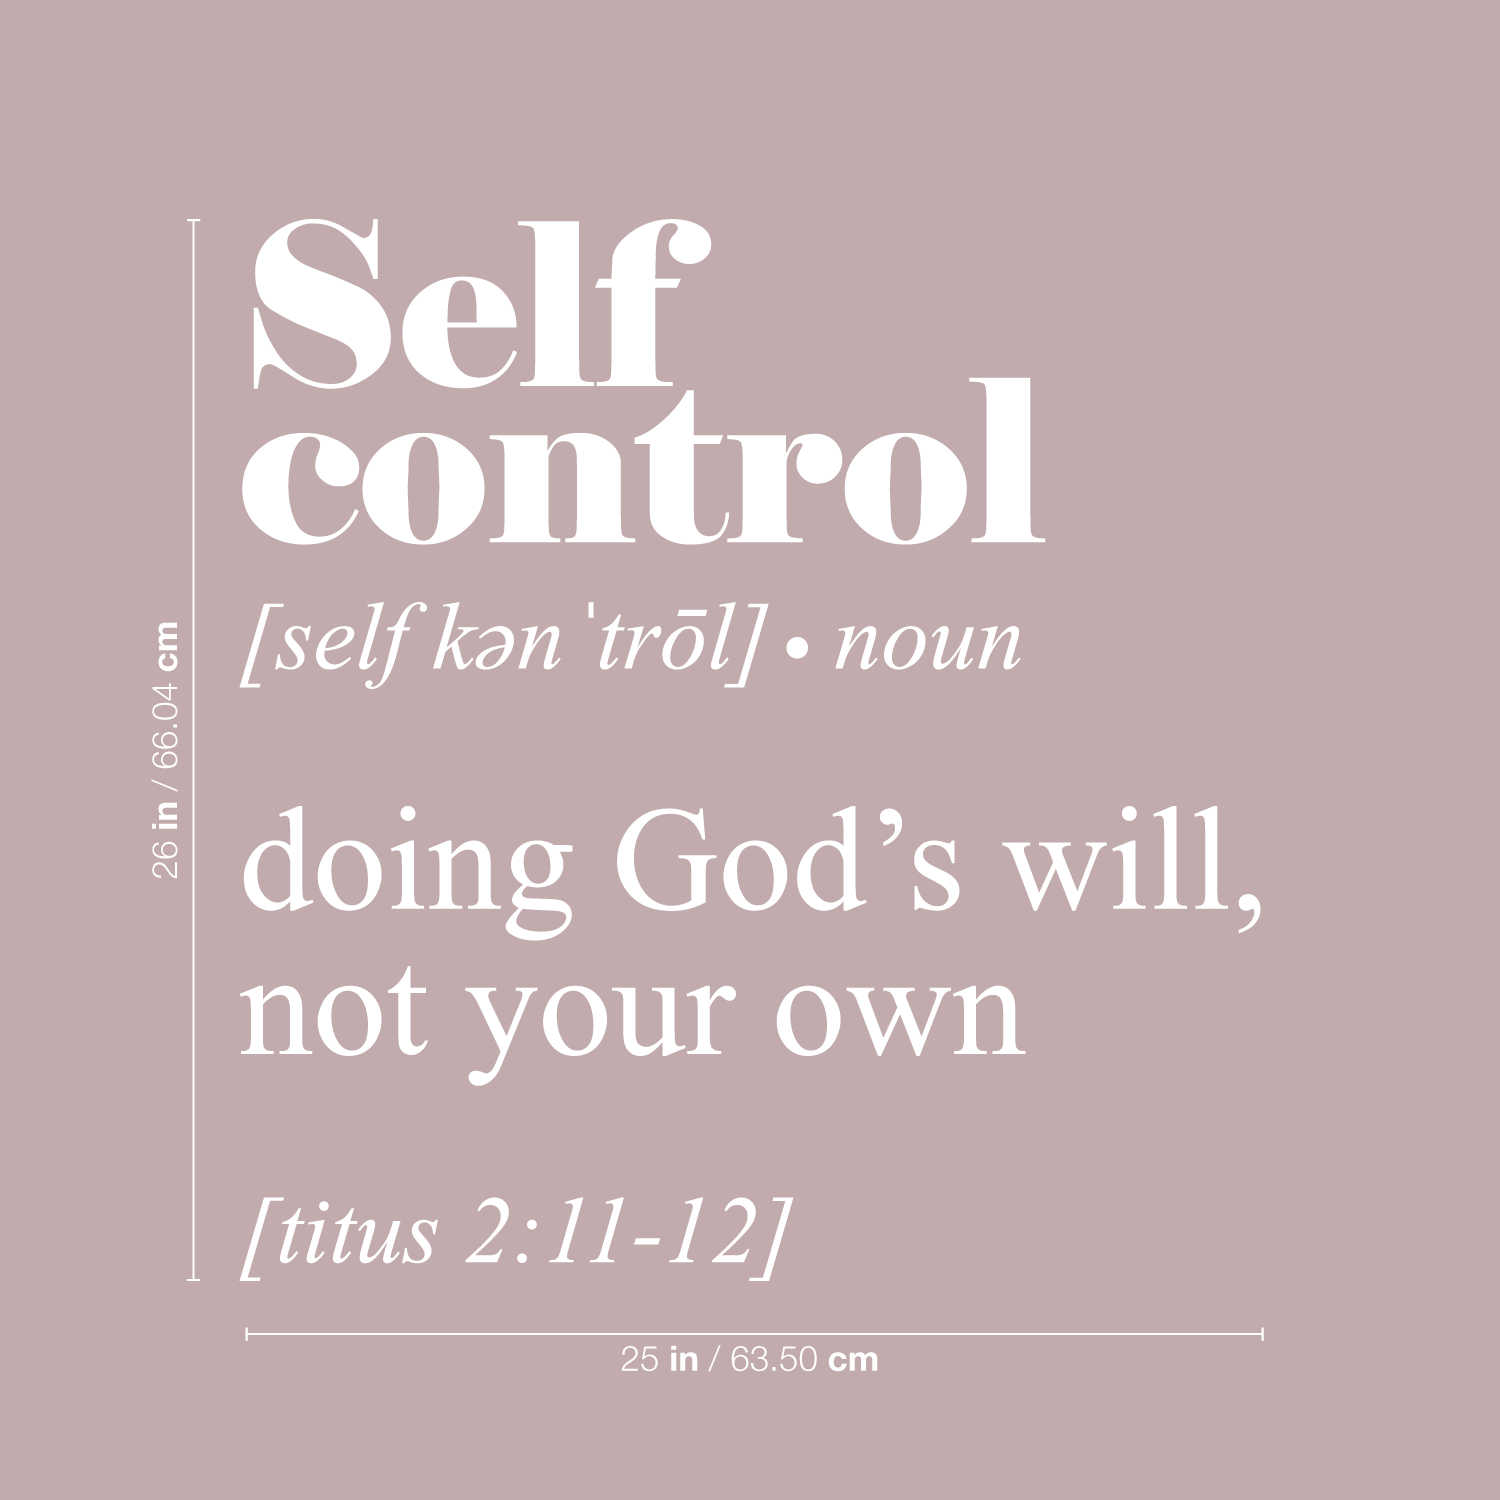 define selfcontrol